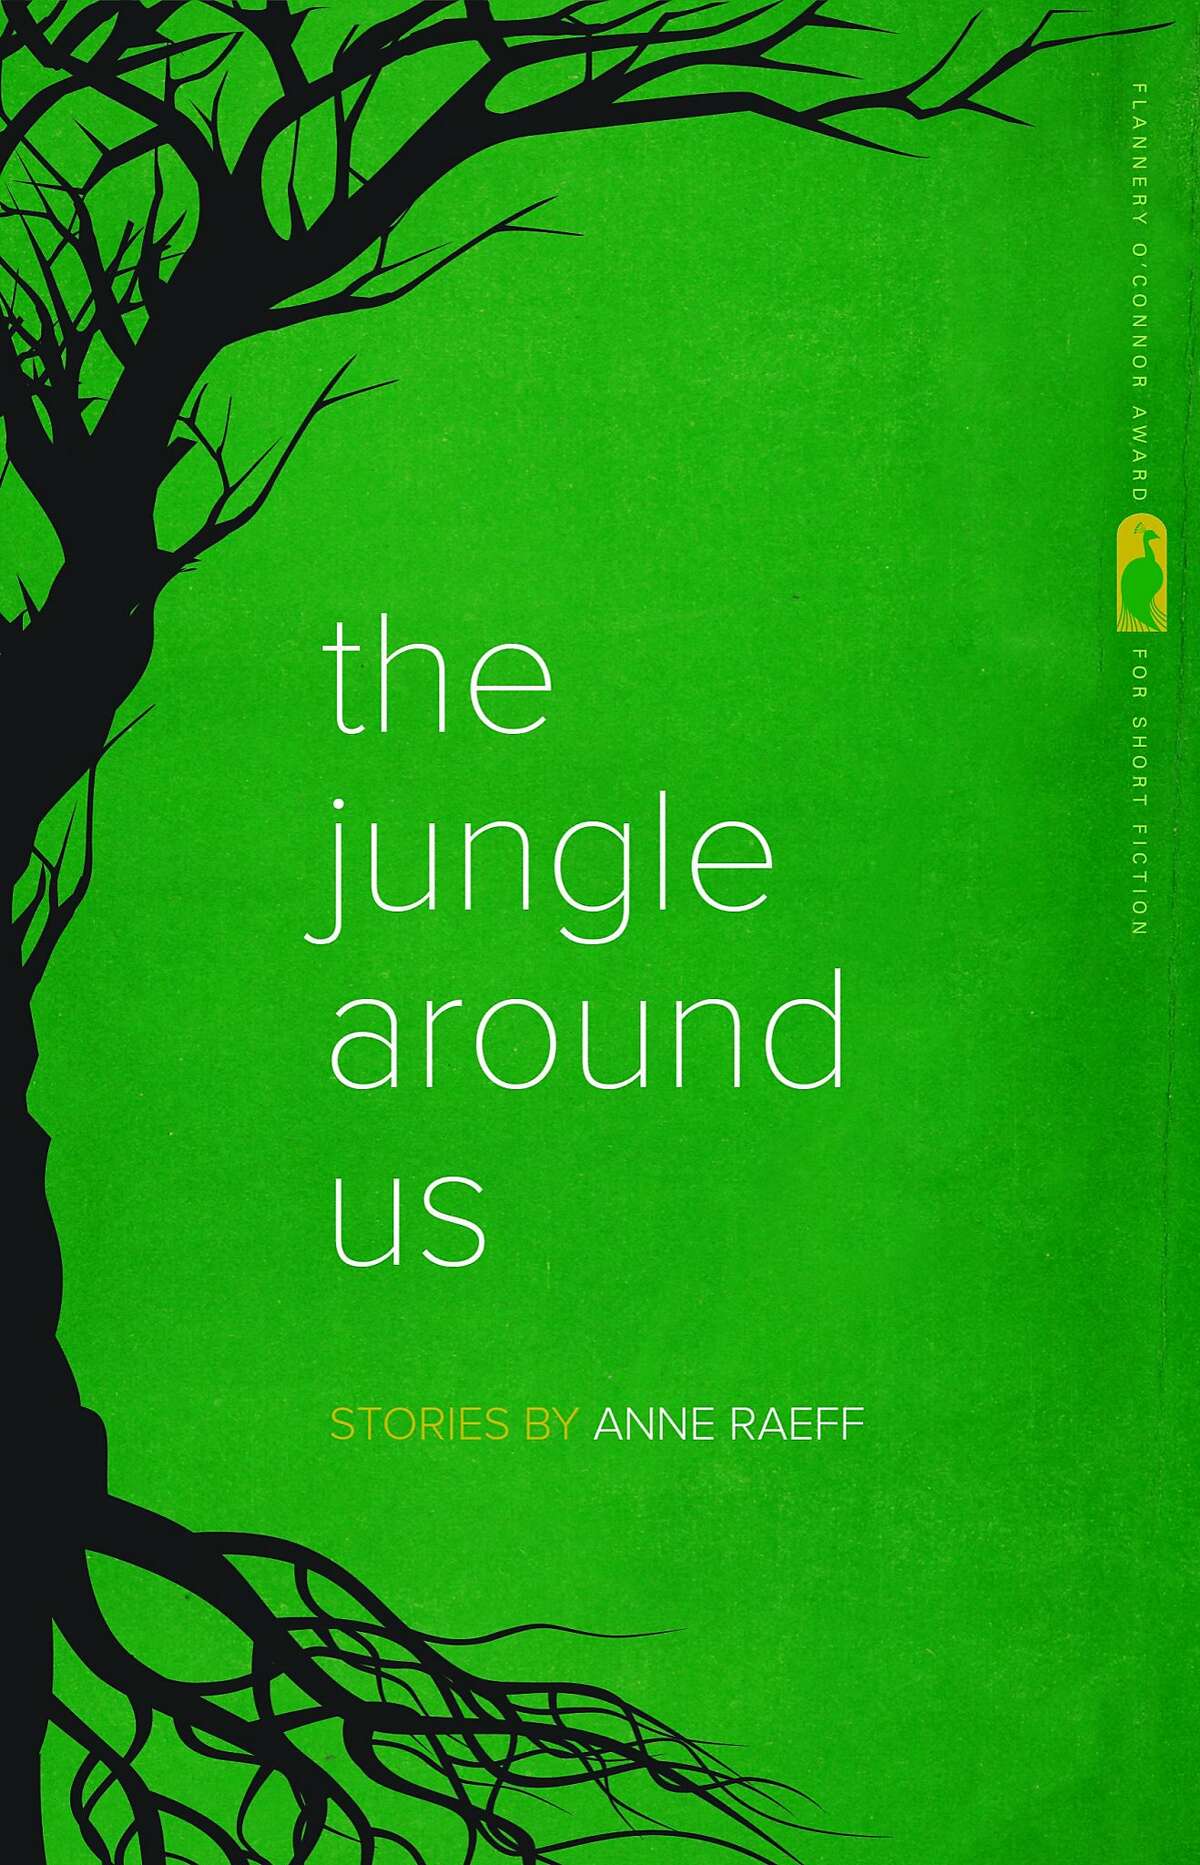 "The Jungle Around Us"